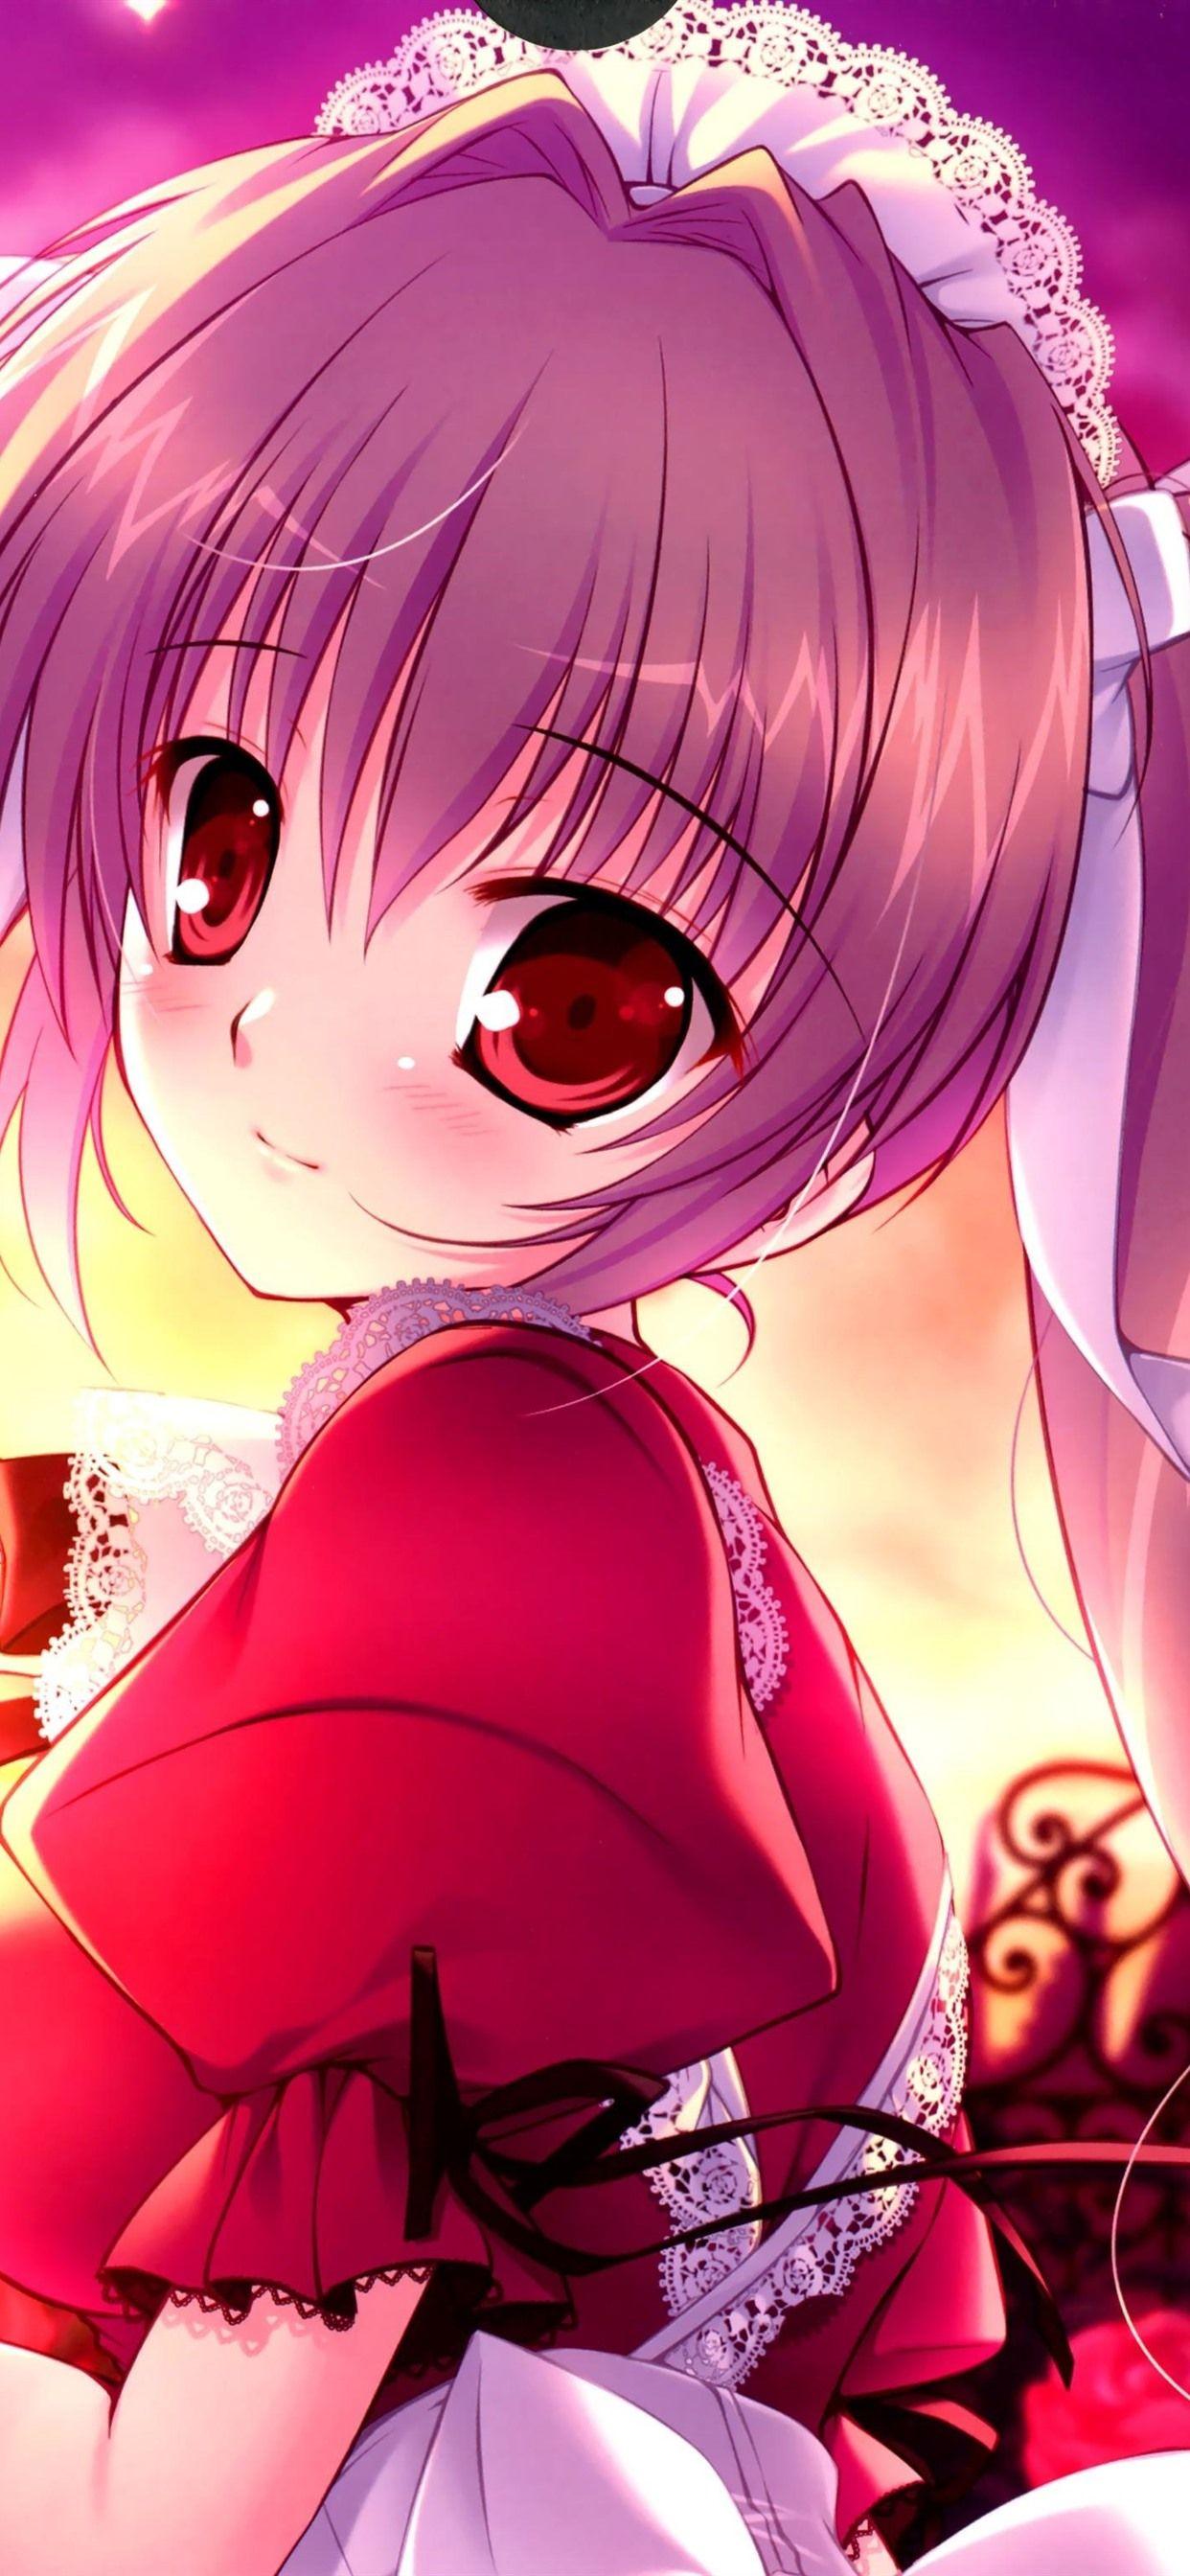 Beautiful Anime Girl iPhone Wallpapers - Top Free Beautiful Anime Girl